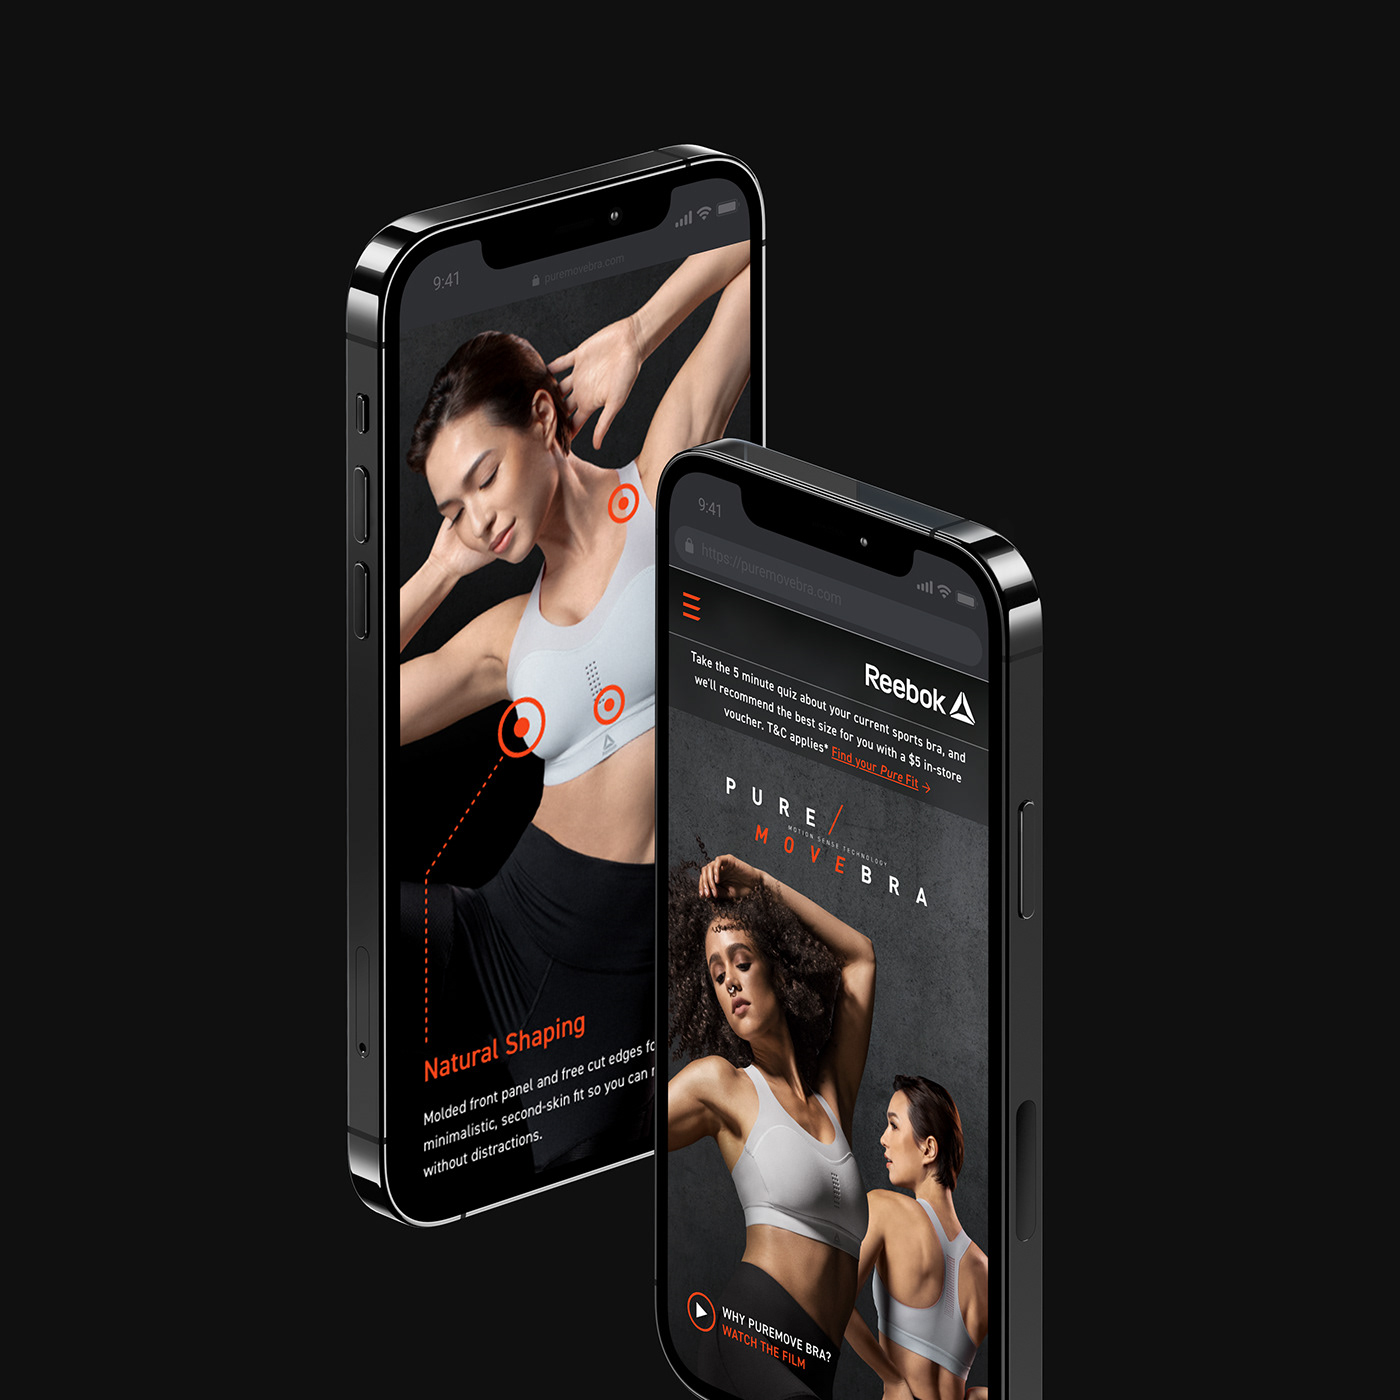 bra campaign fitness product reebok sports Website women workout